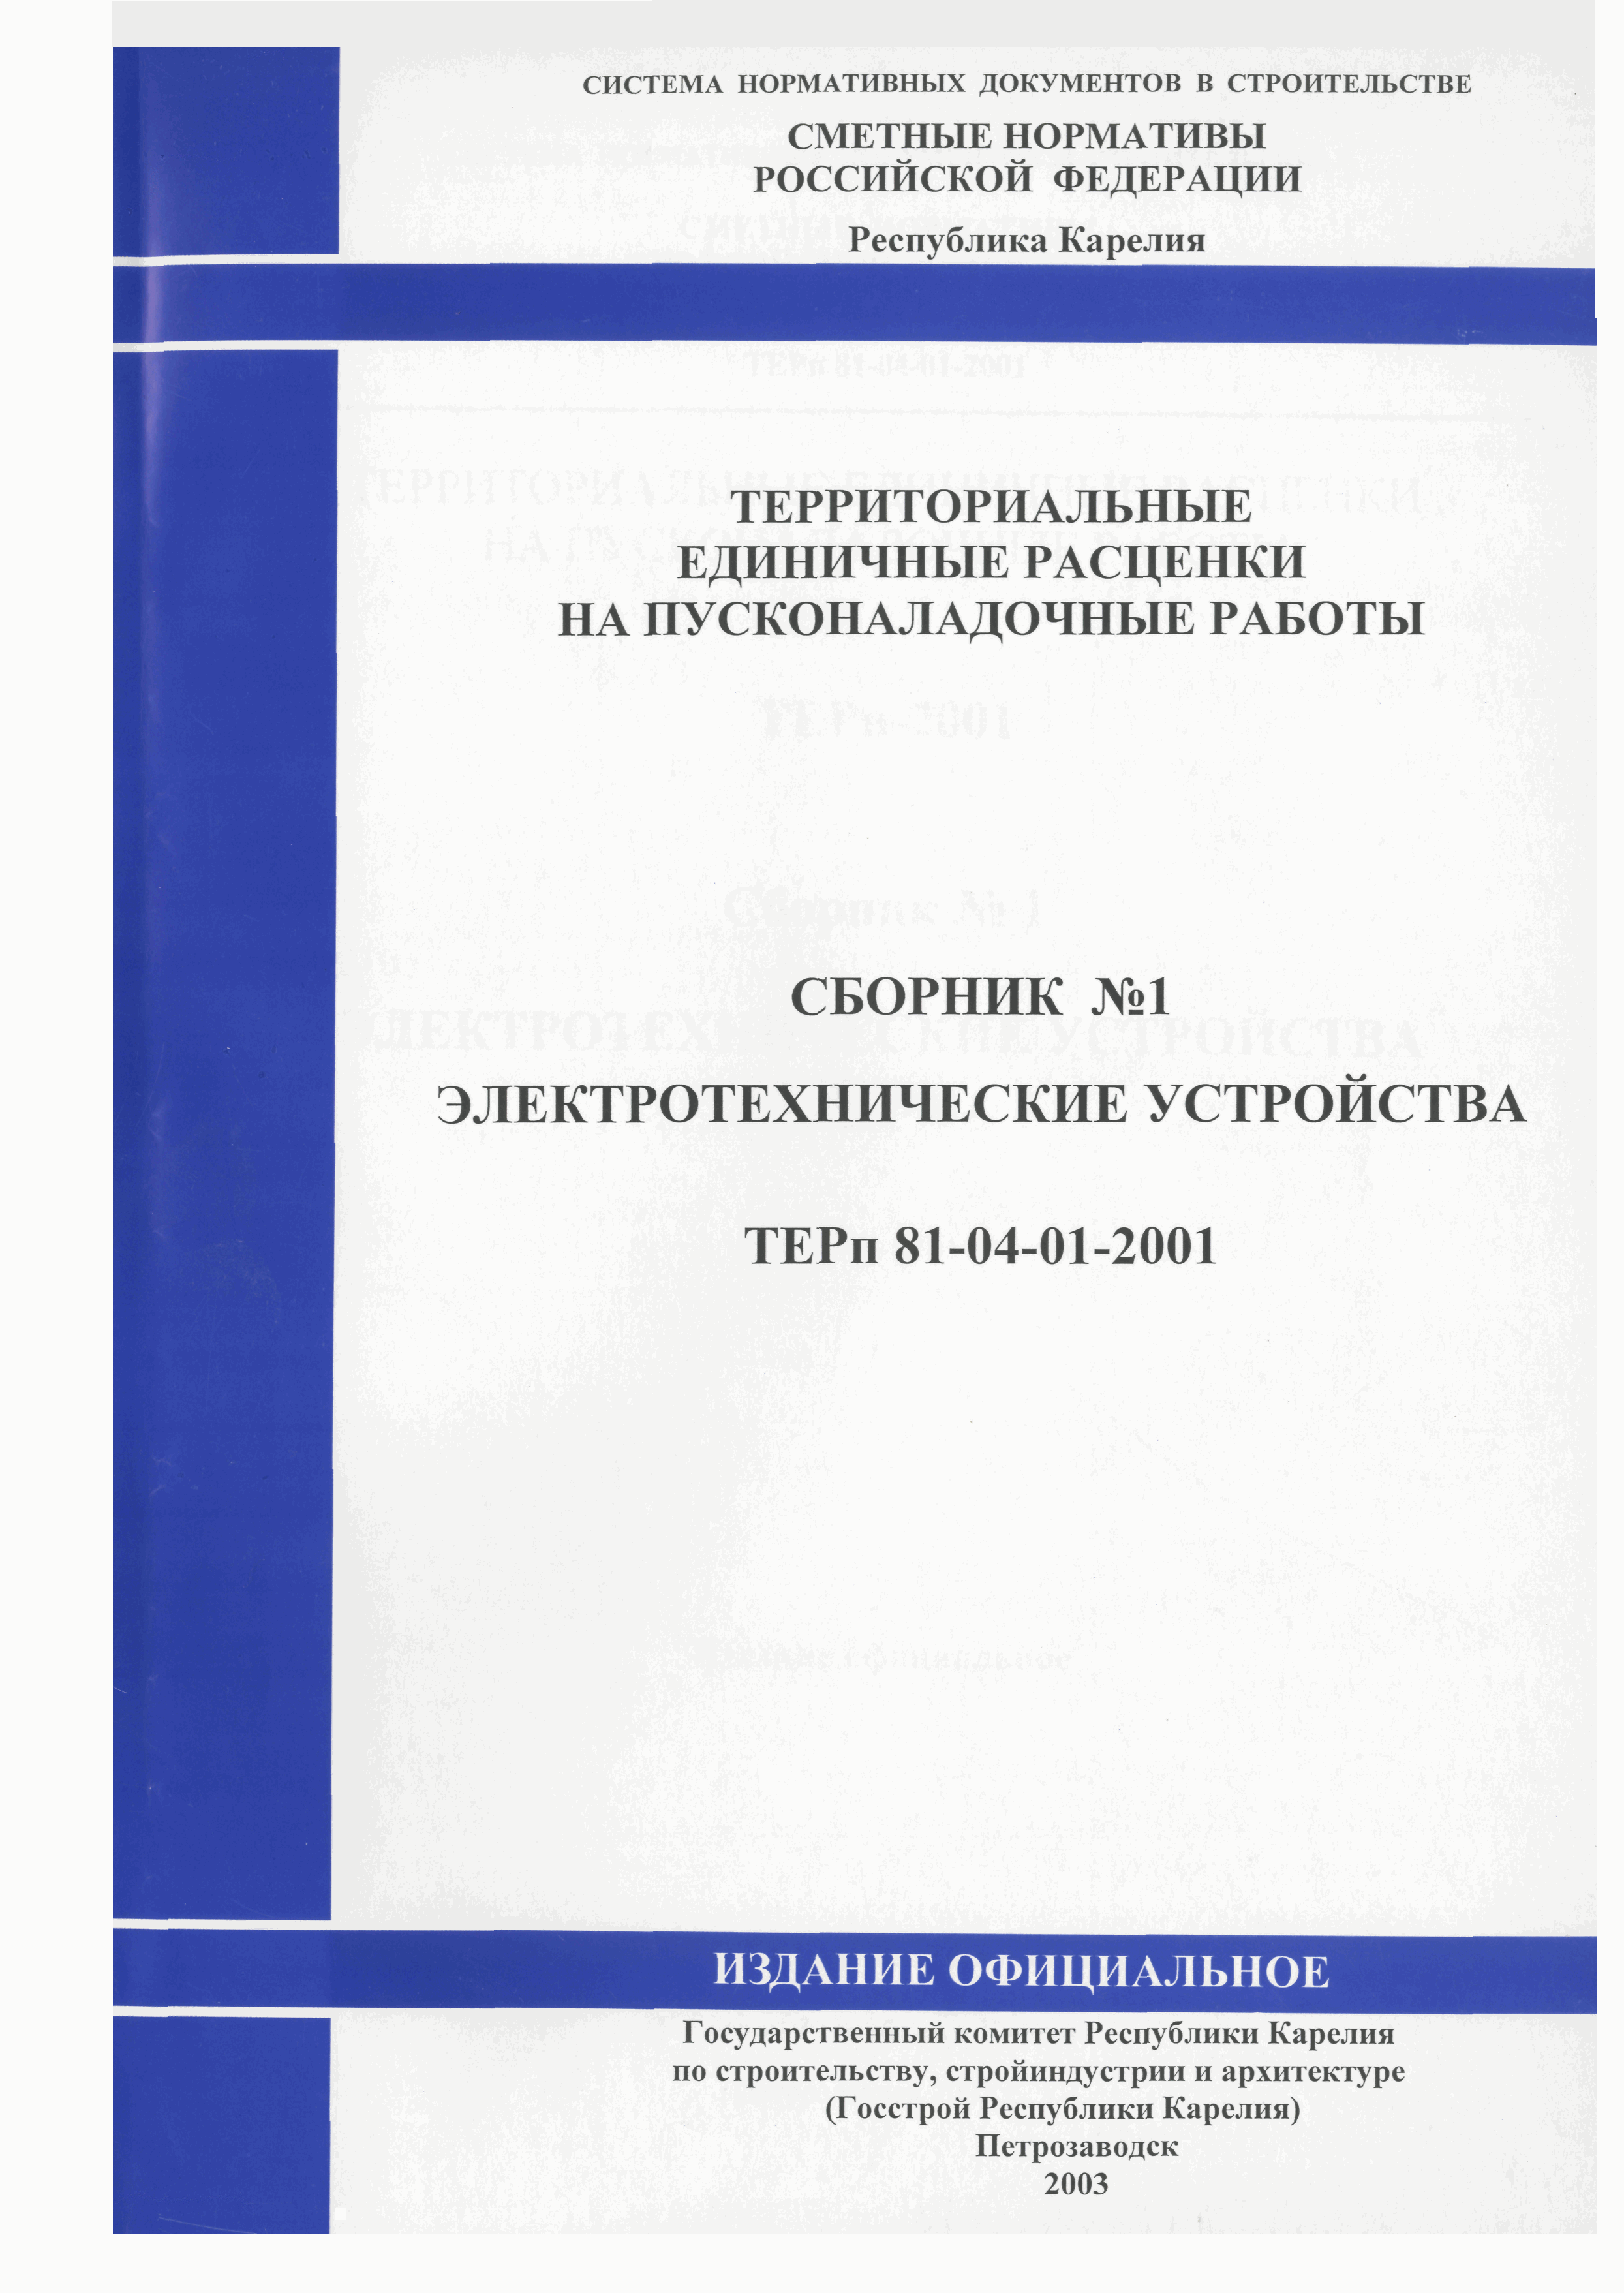 ТЕРп Республика Карелия 2001-01